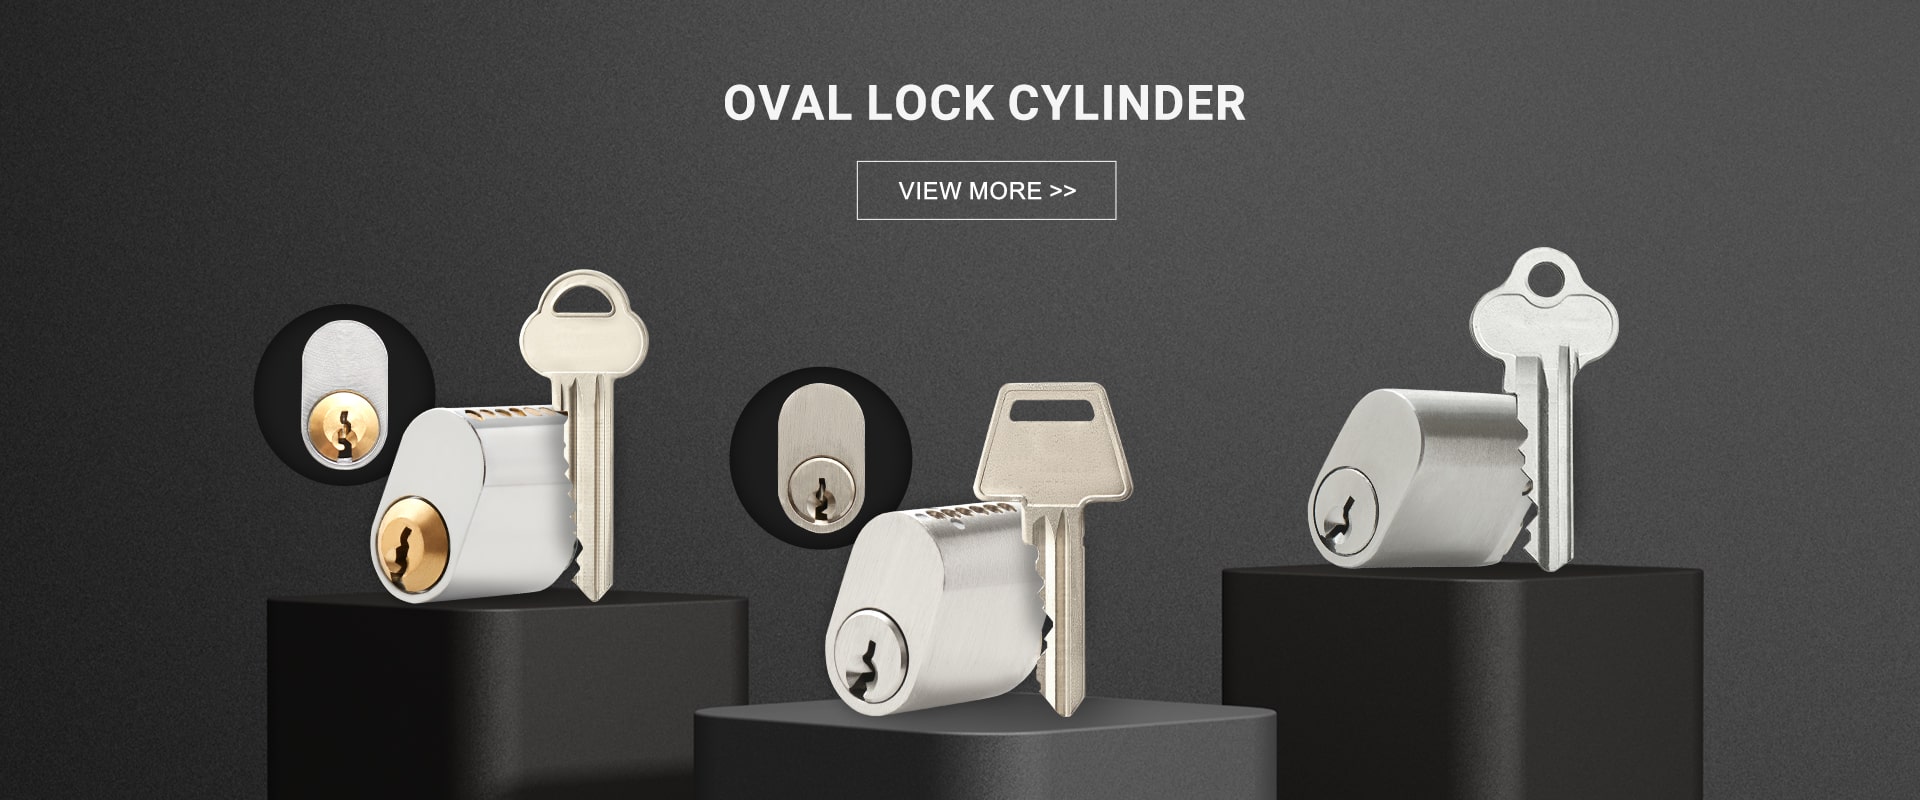 oval lock cylinder